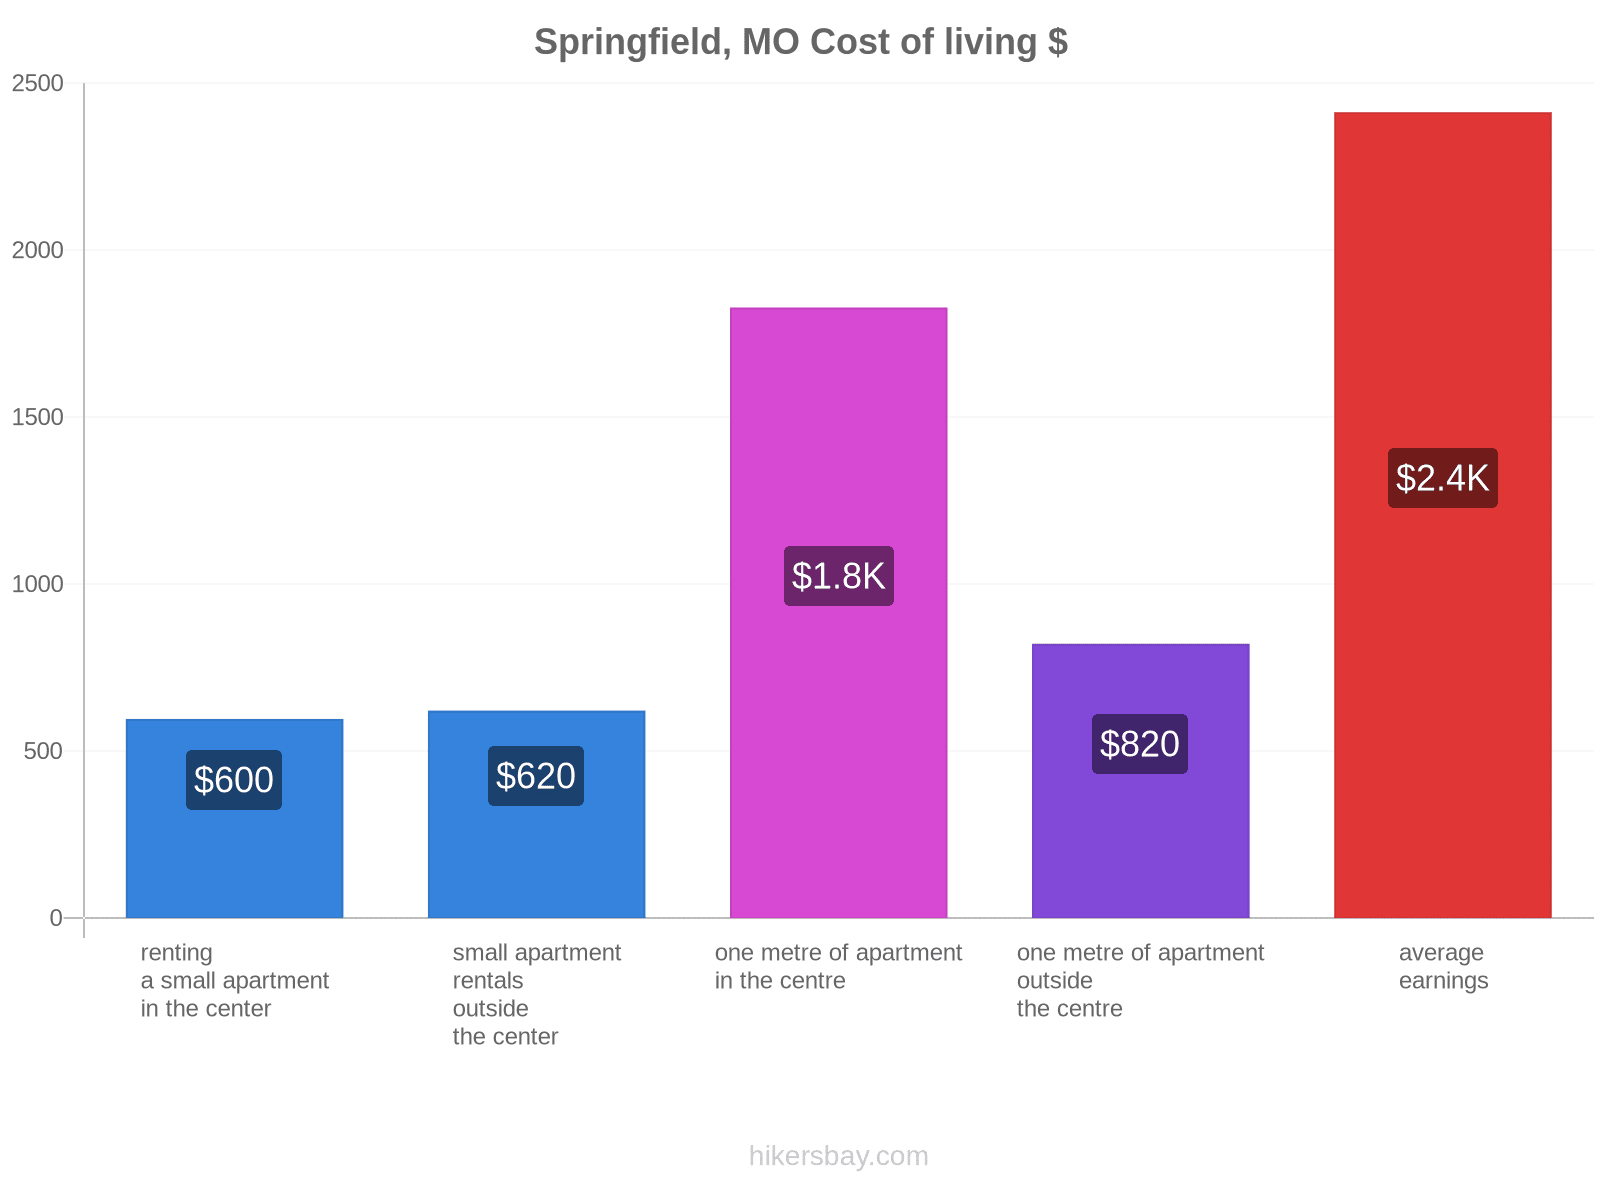 Springfield, MO cost of living hikersbay.com